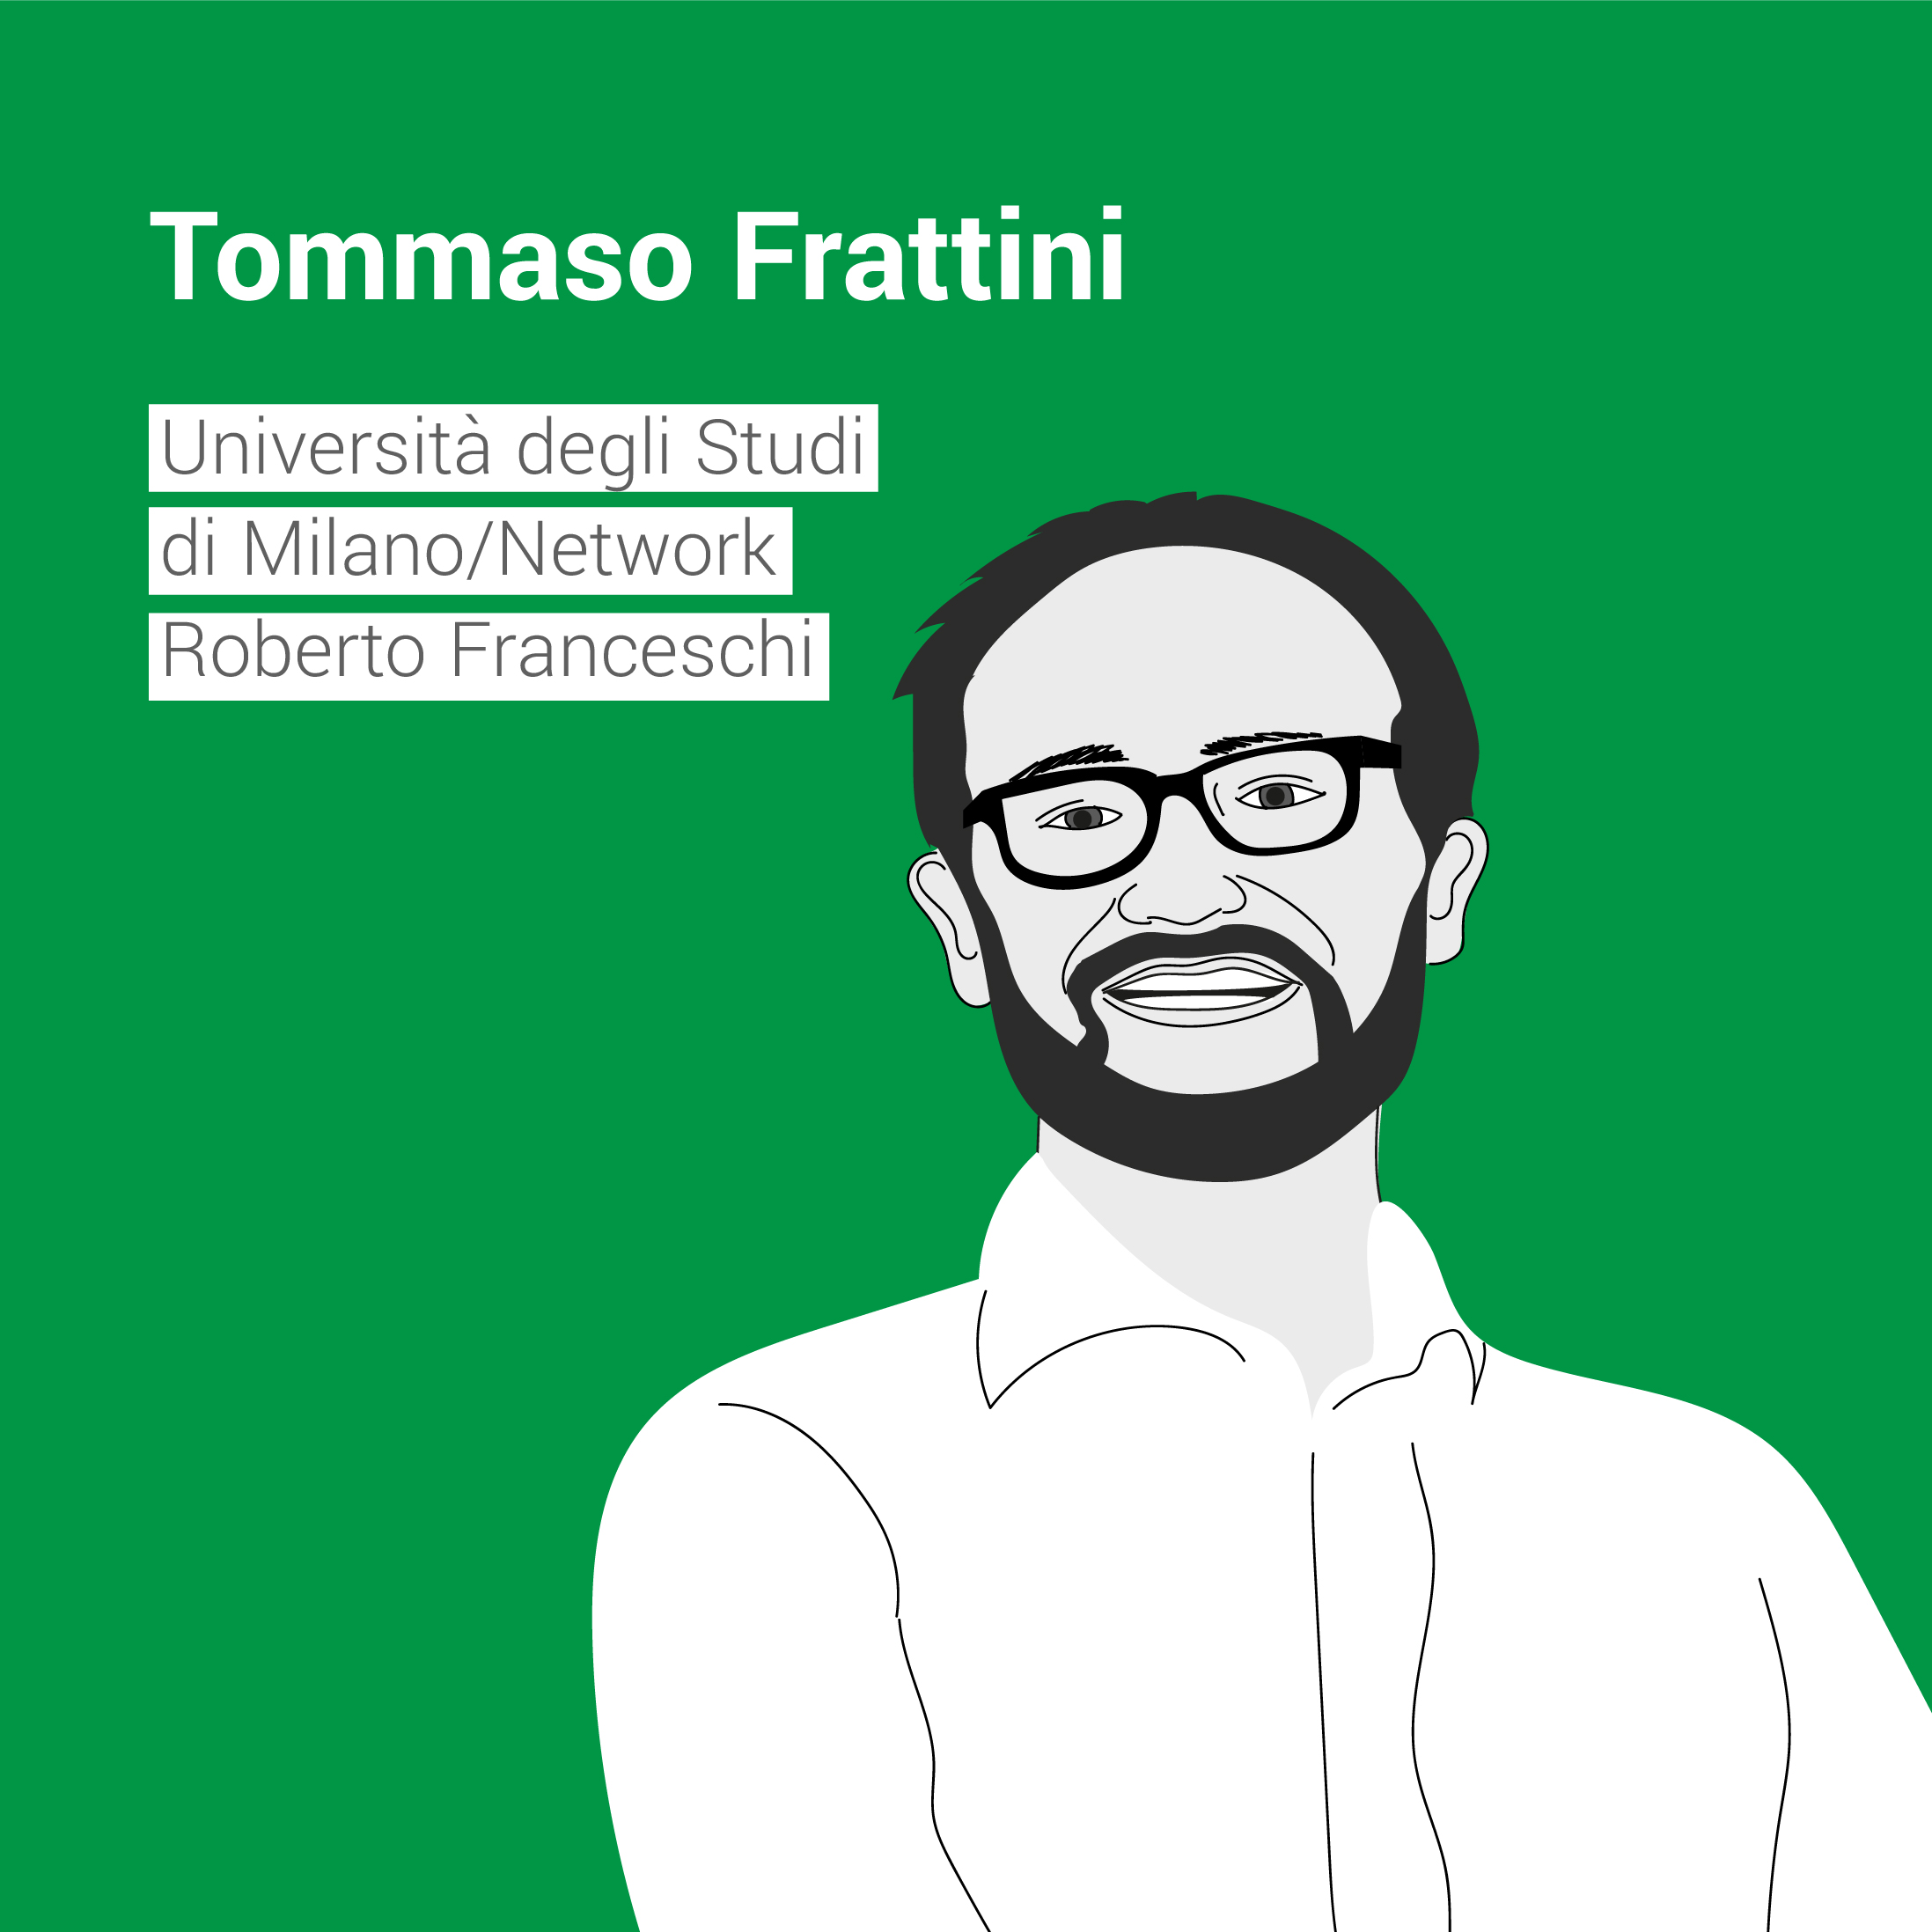 Tommaso Frattini